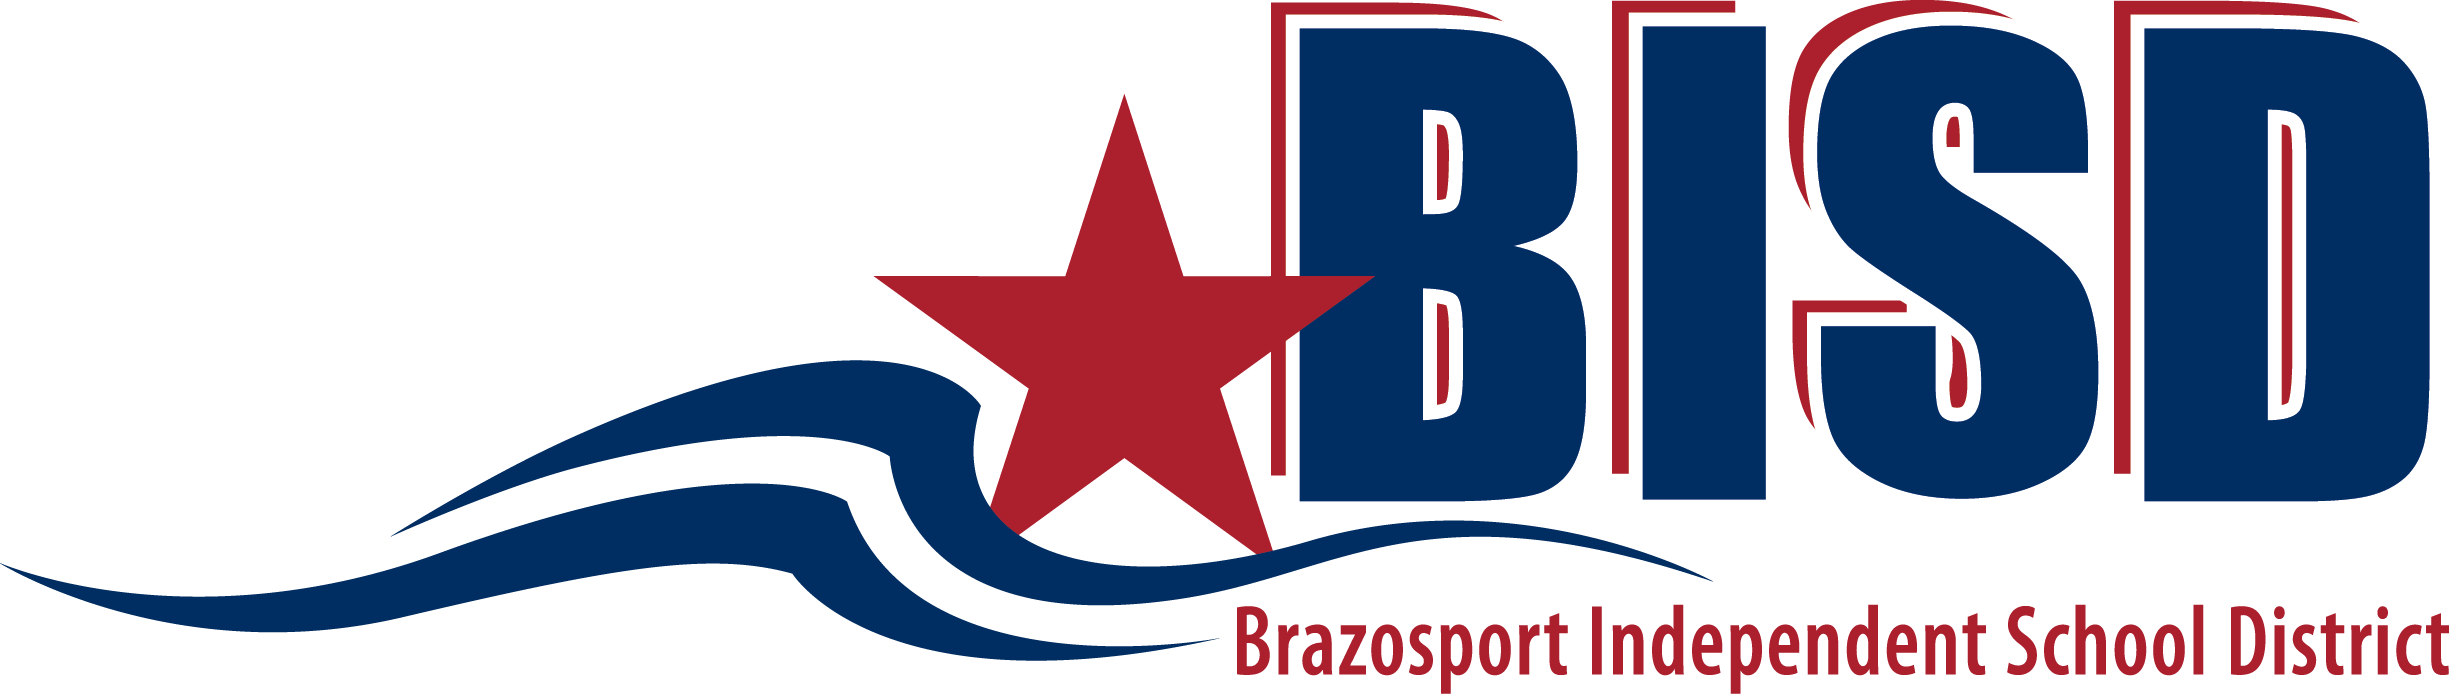 Brazosport ISD logo for ST Math Visual Math Program testimonial